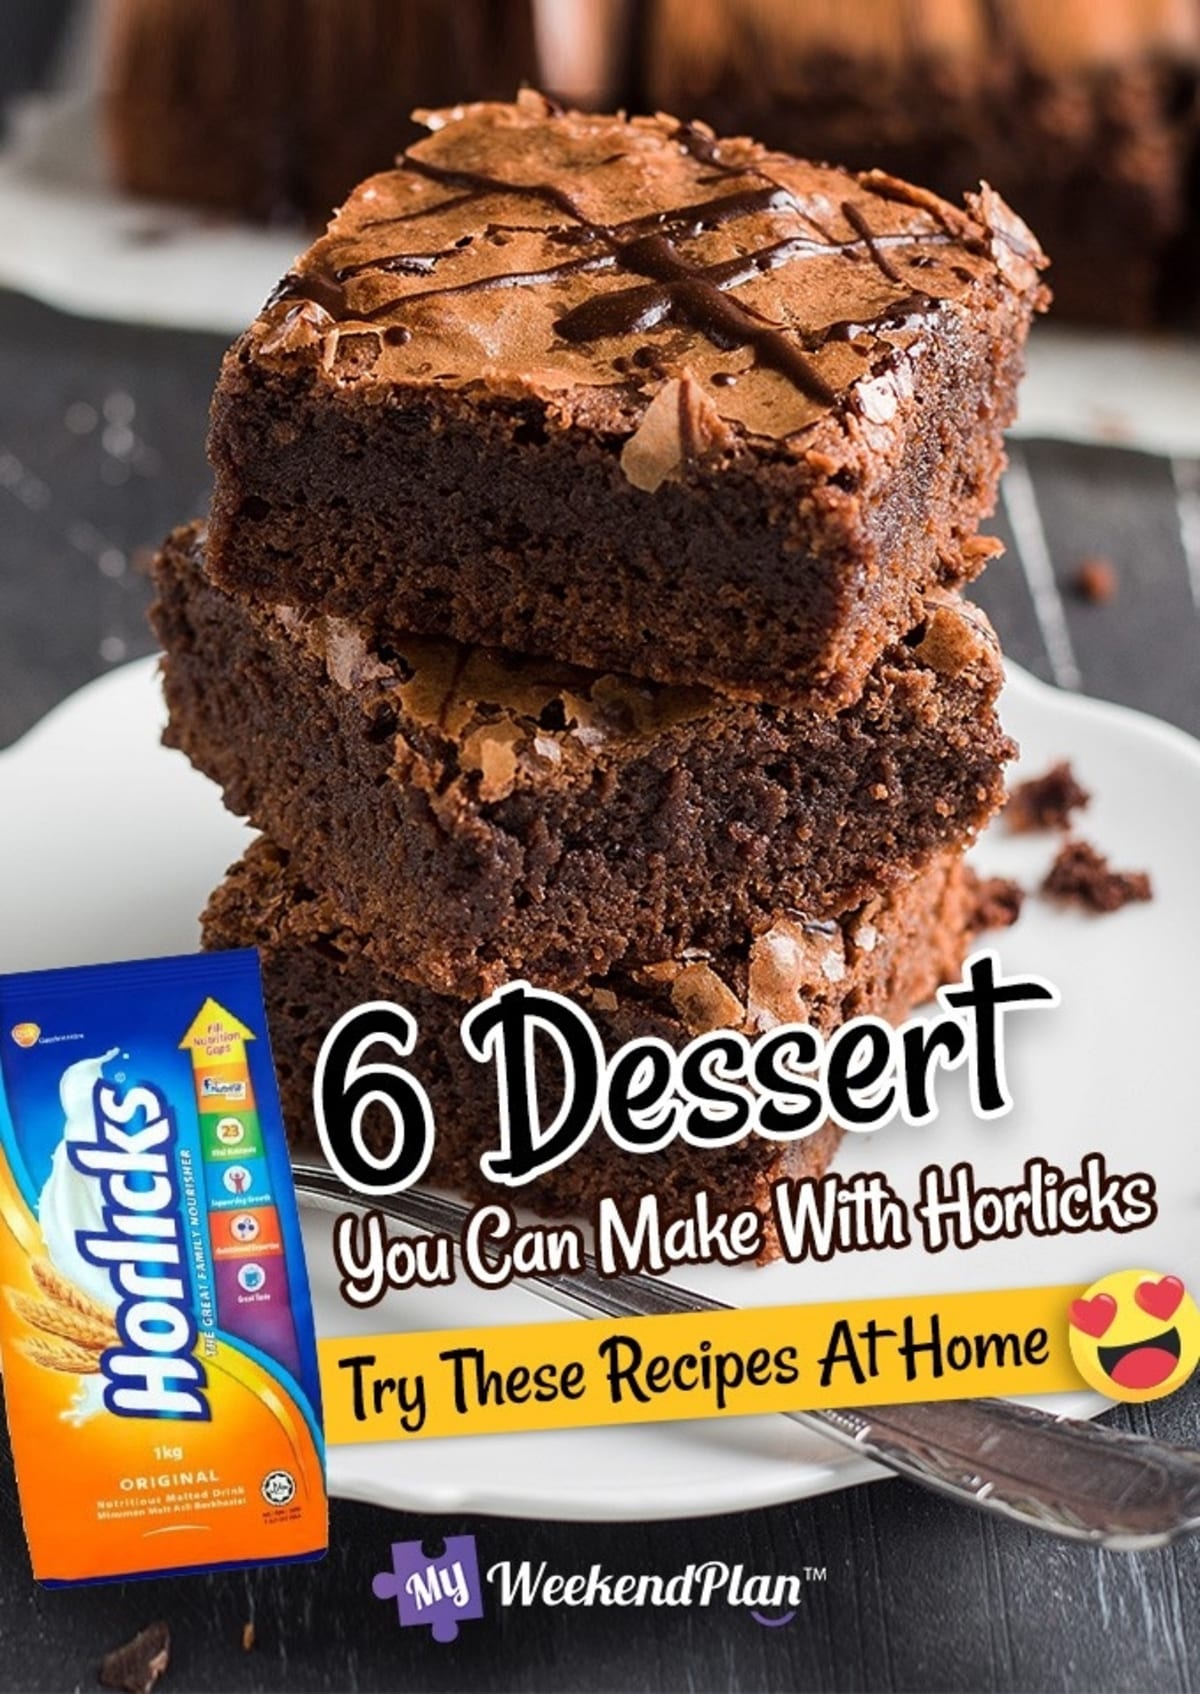 6 desserts recipe by using horlicks